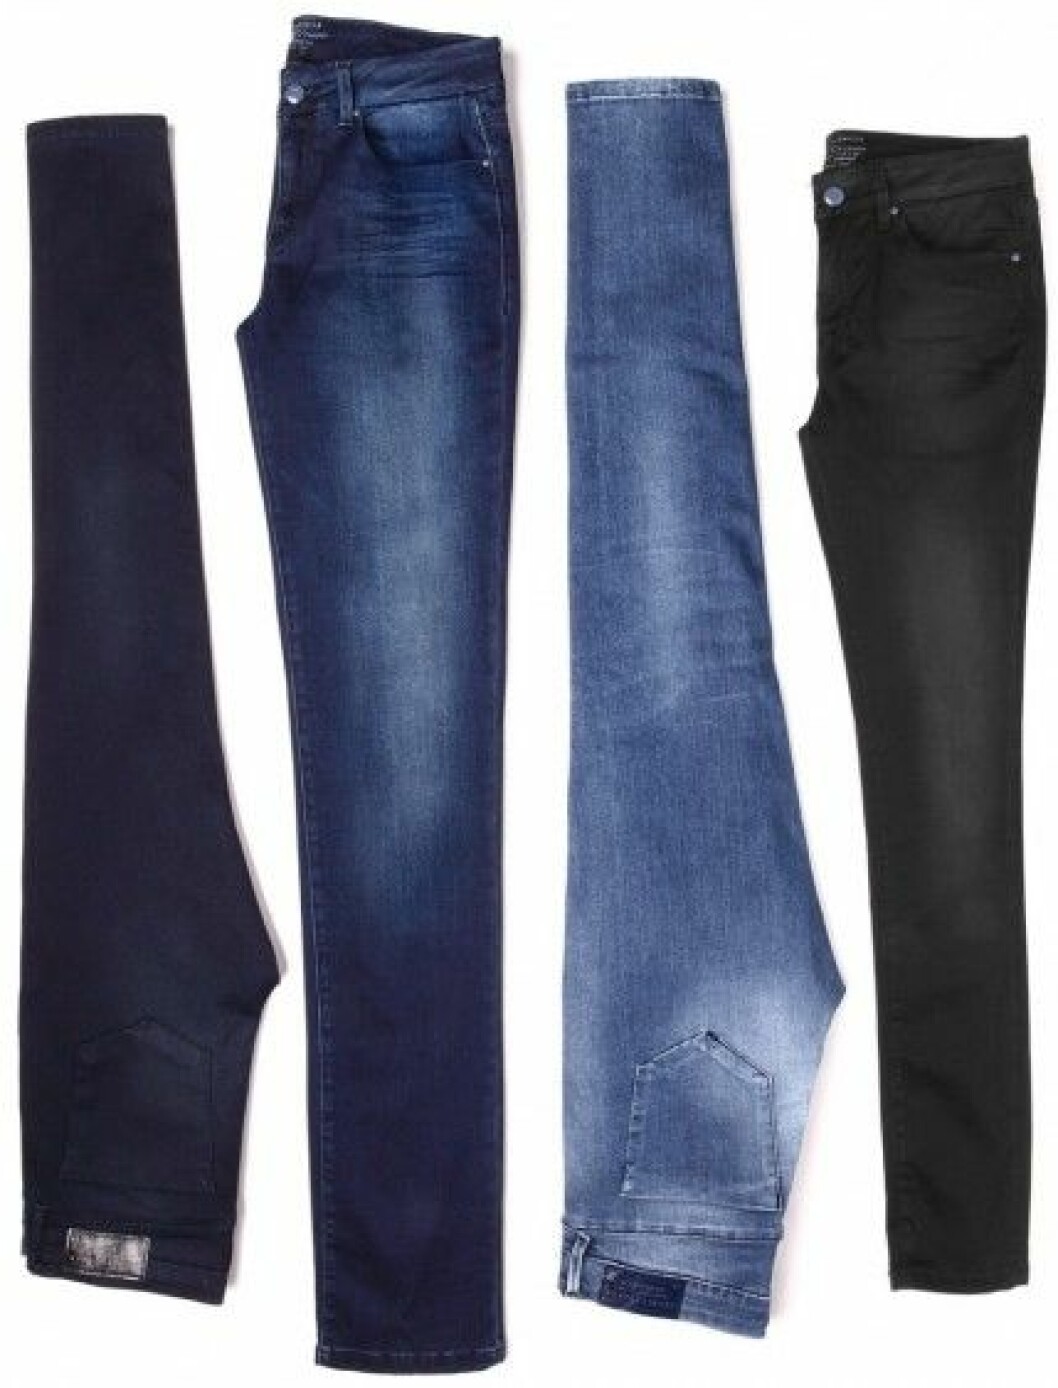 Jeans från Esprit Denim.